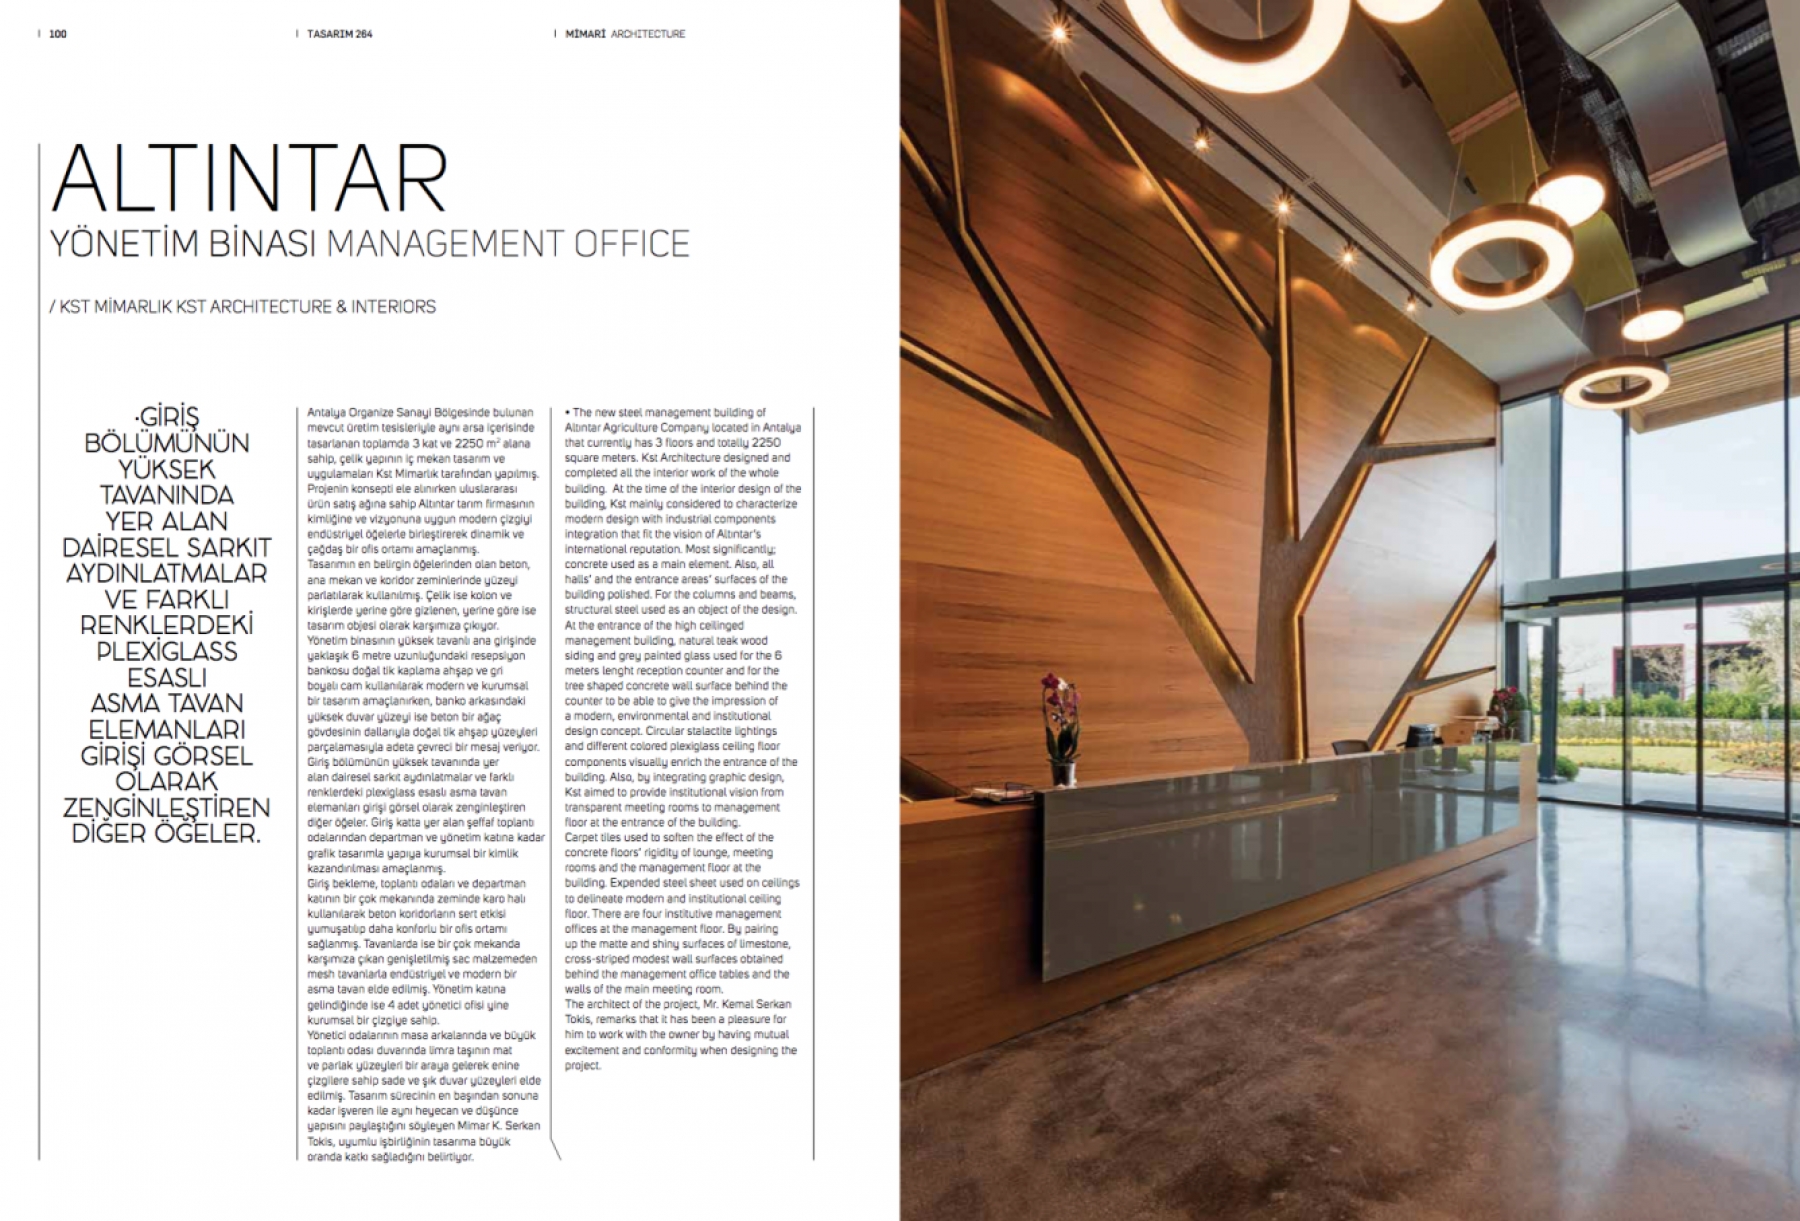 Tasarım Magazine 246 - Altıntar Management Office